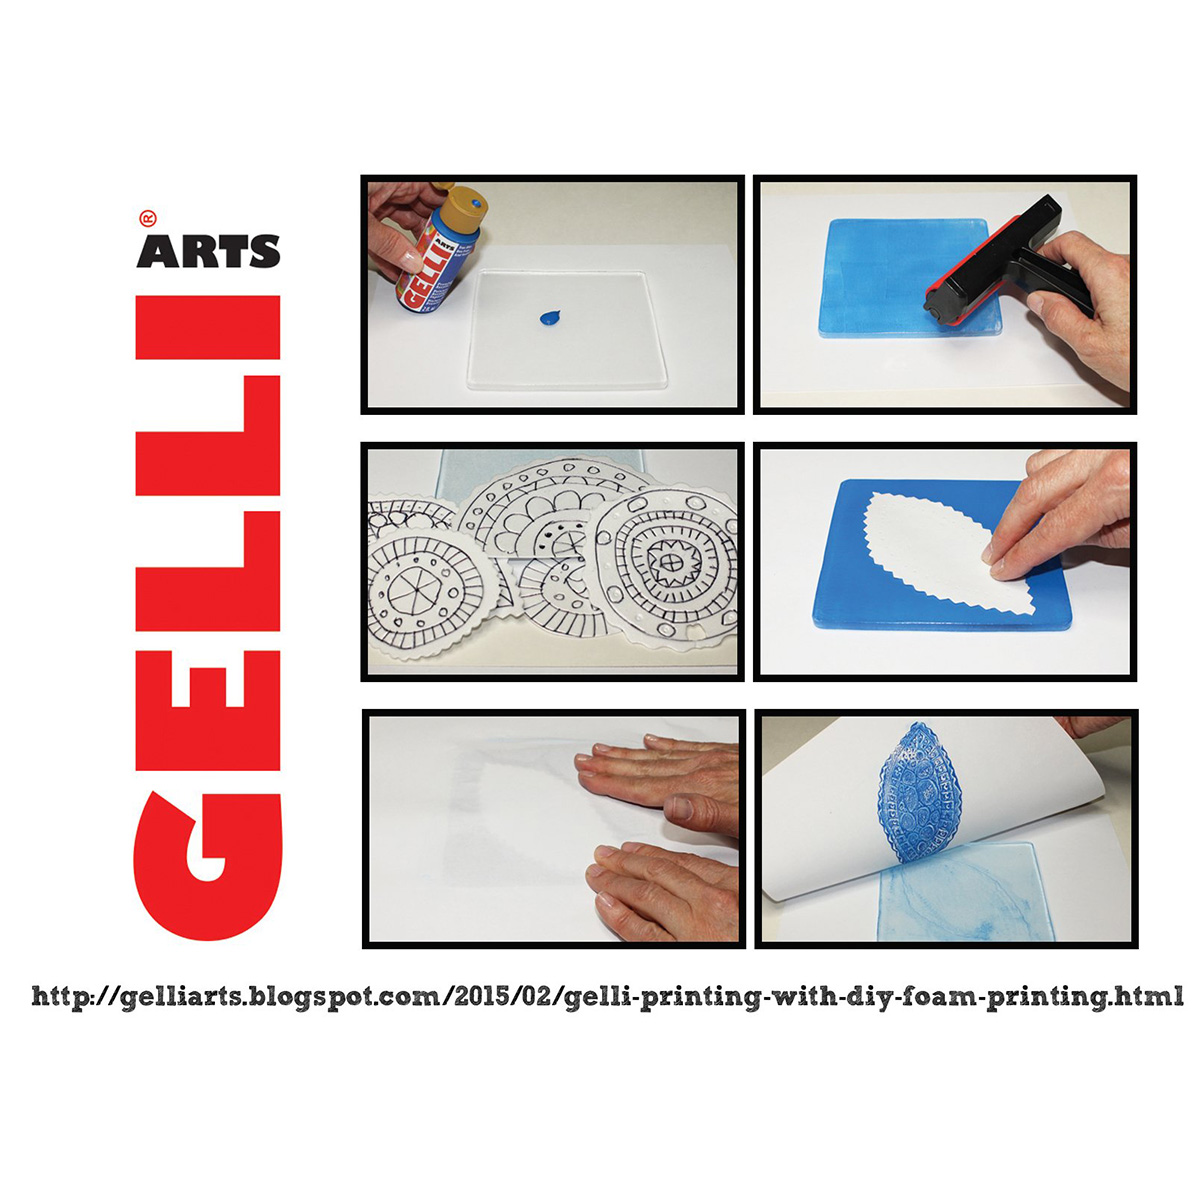 Gelli Stempel print Kit van Gelli Arts